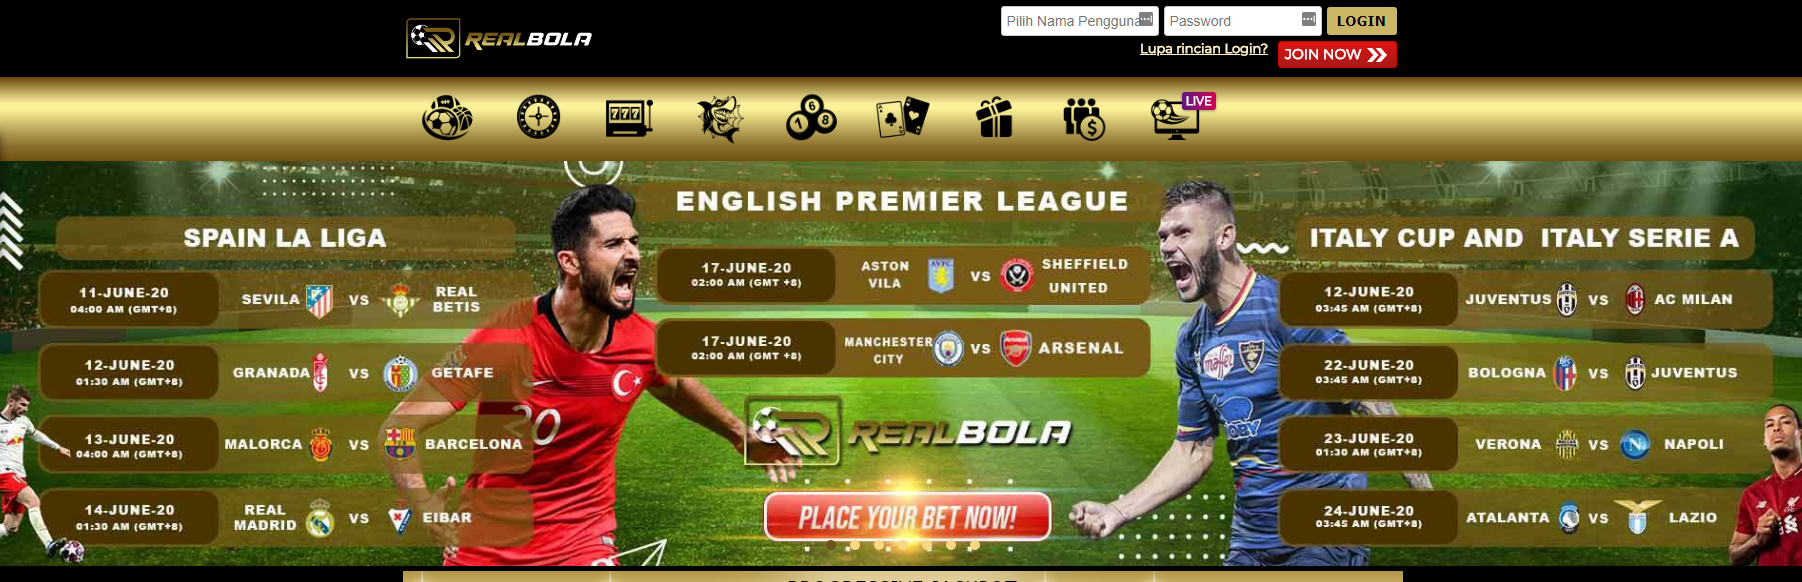 Situs permainan online Realbola - Bremen vs Bayern